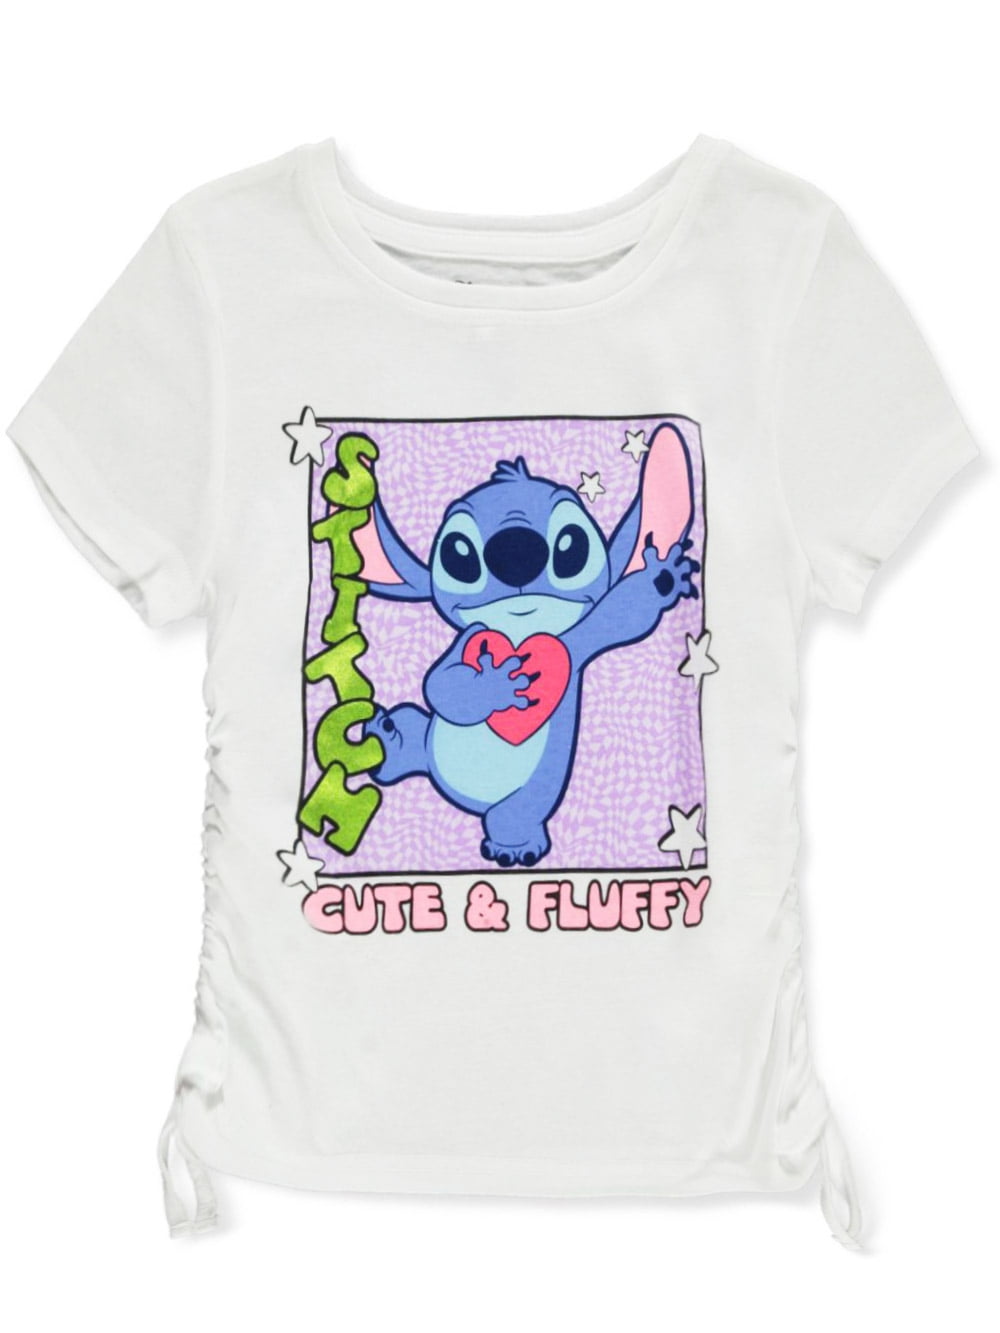 Disney Lilo & Stitch Girls' Cute T-Shirt - white, 10 - 12 (Big Girls)